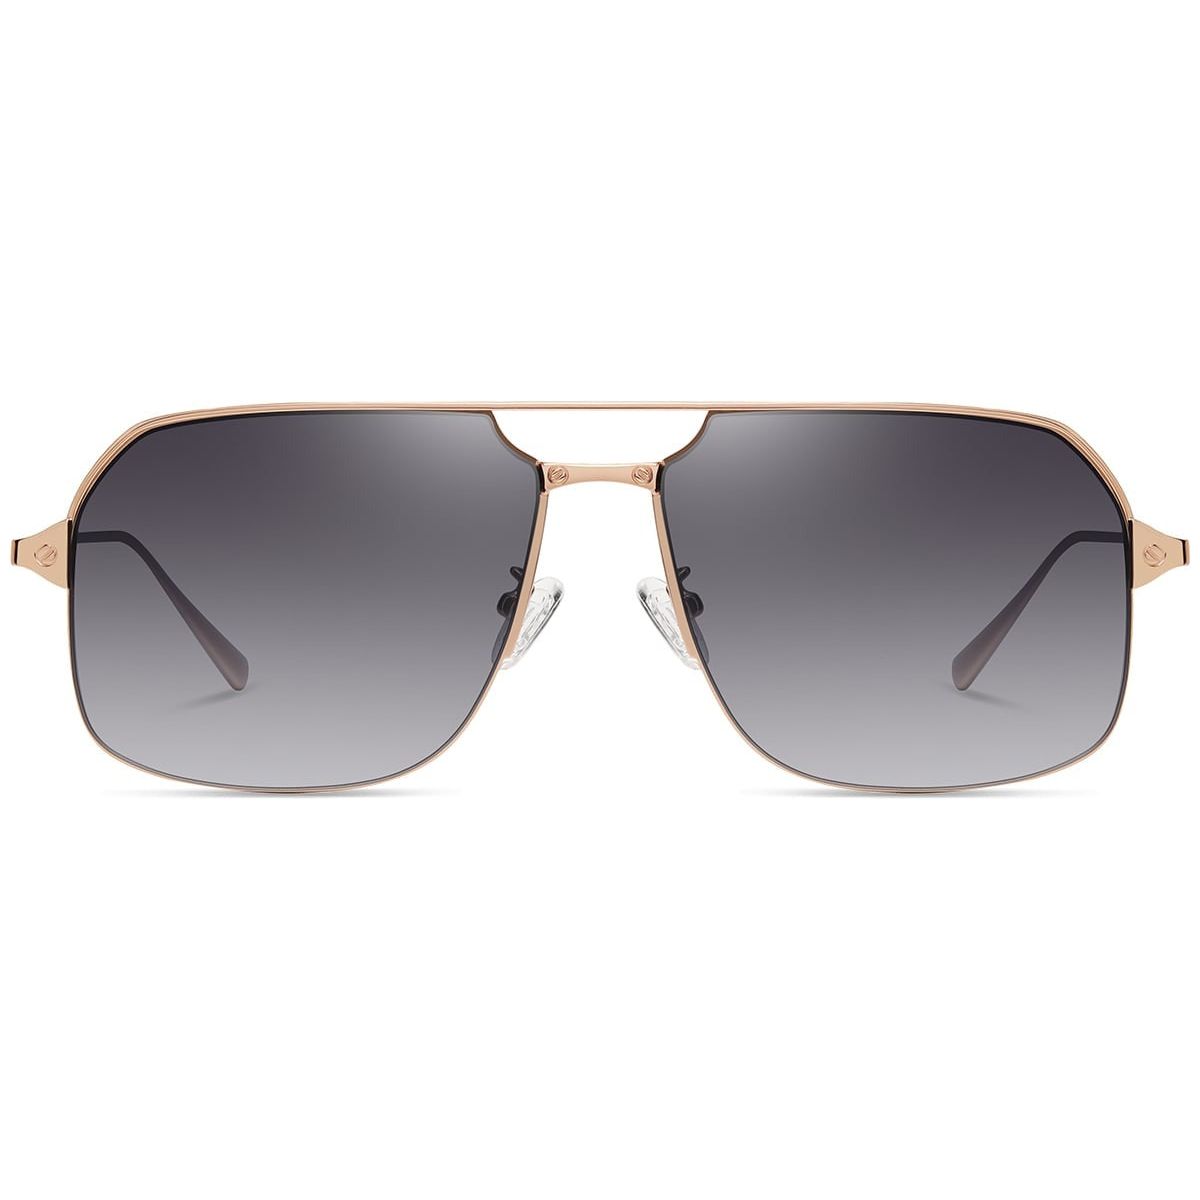 Candye Aviator Geometric Sunglasses SG4321 